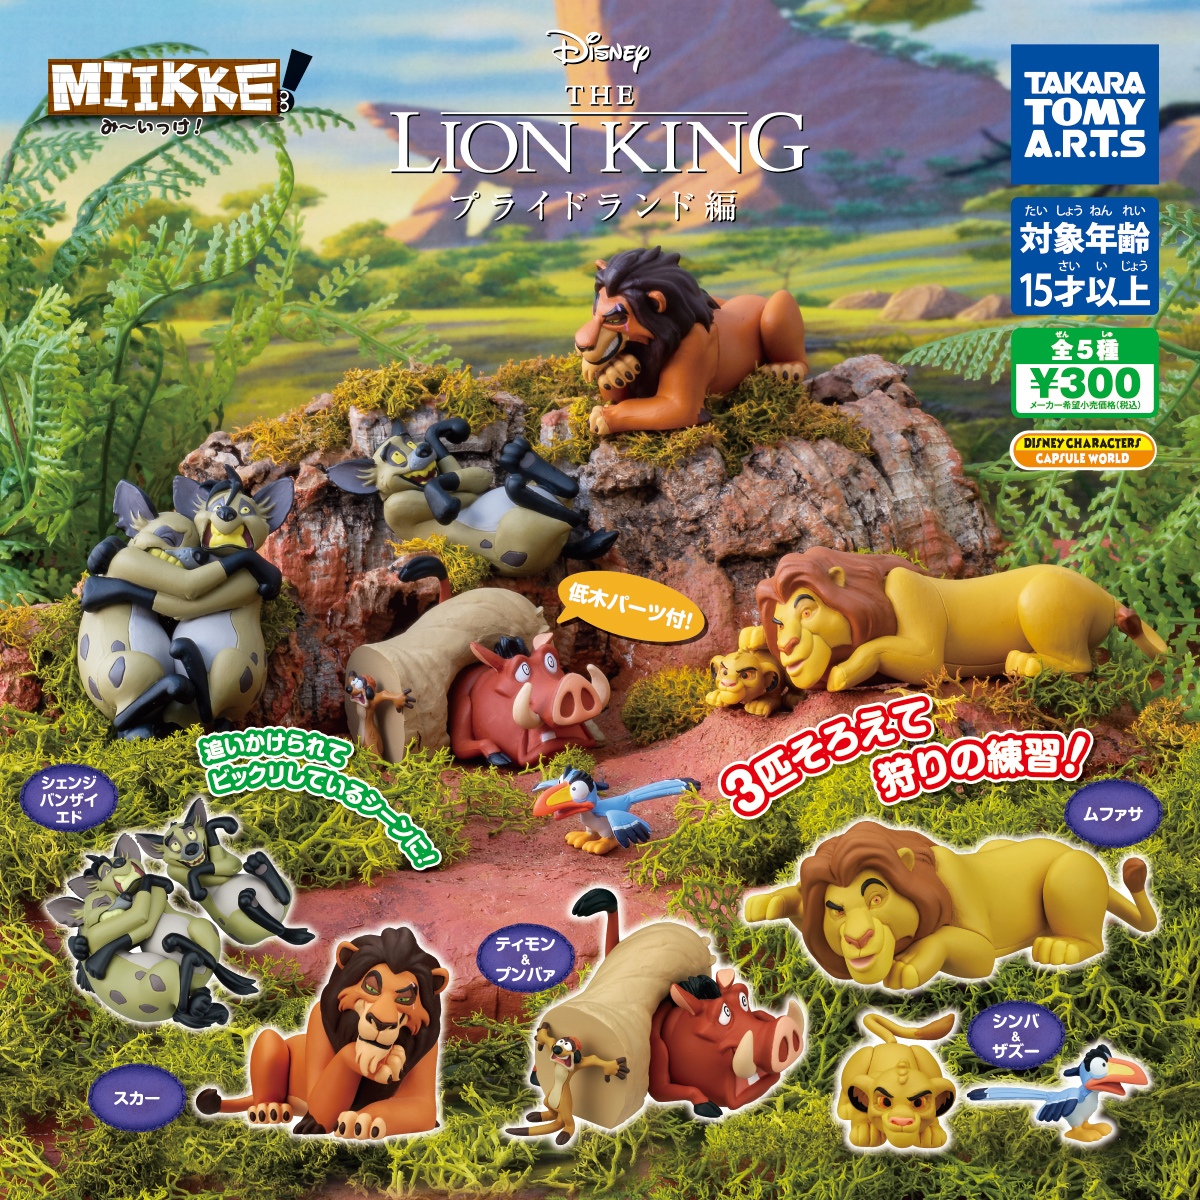 Takara Tomy ARTS Disney The Lion King Miikke Mufasa & SImba mini figure new